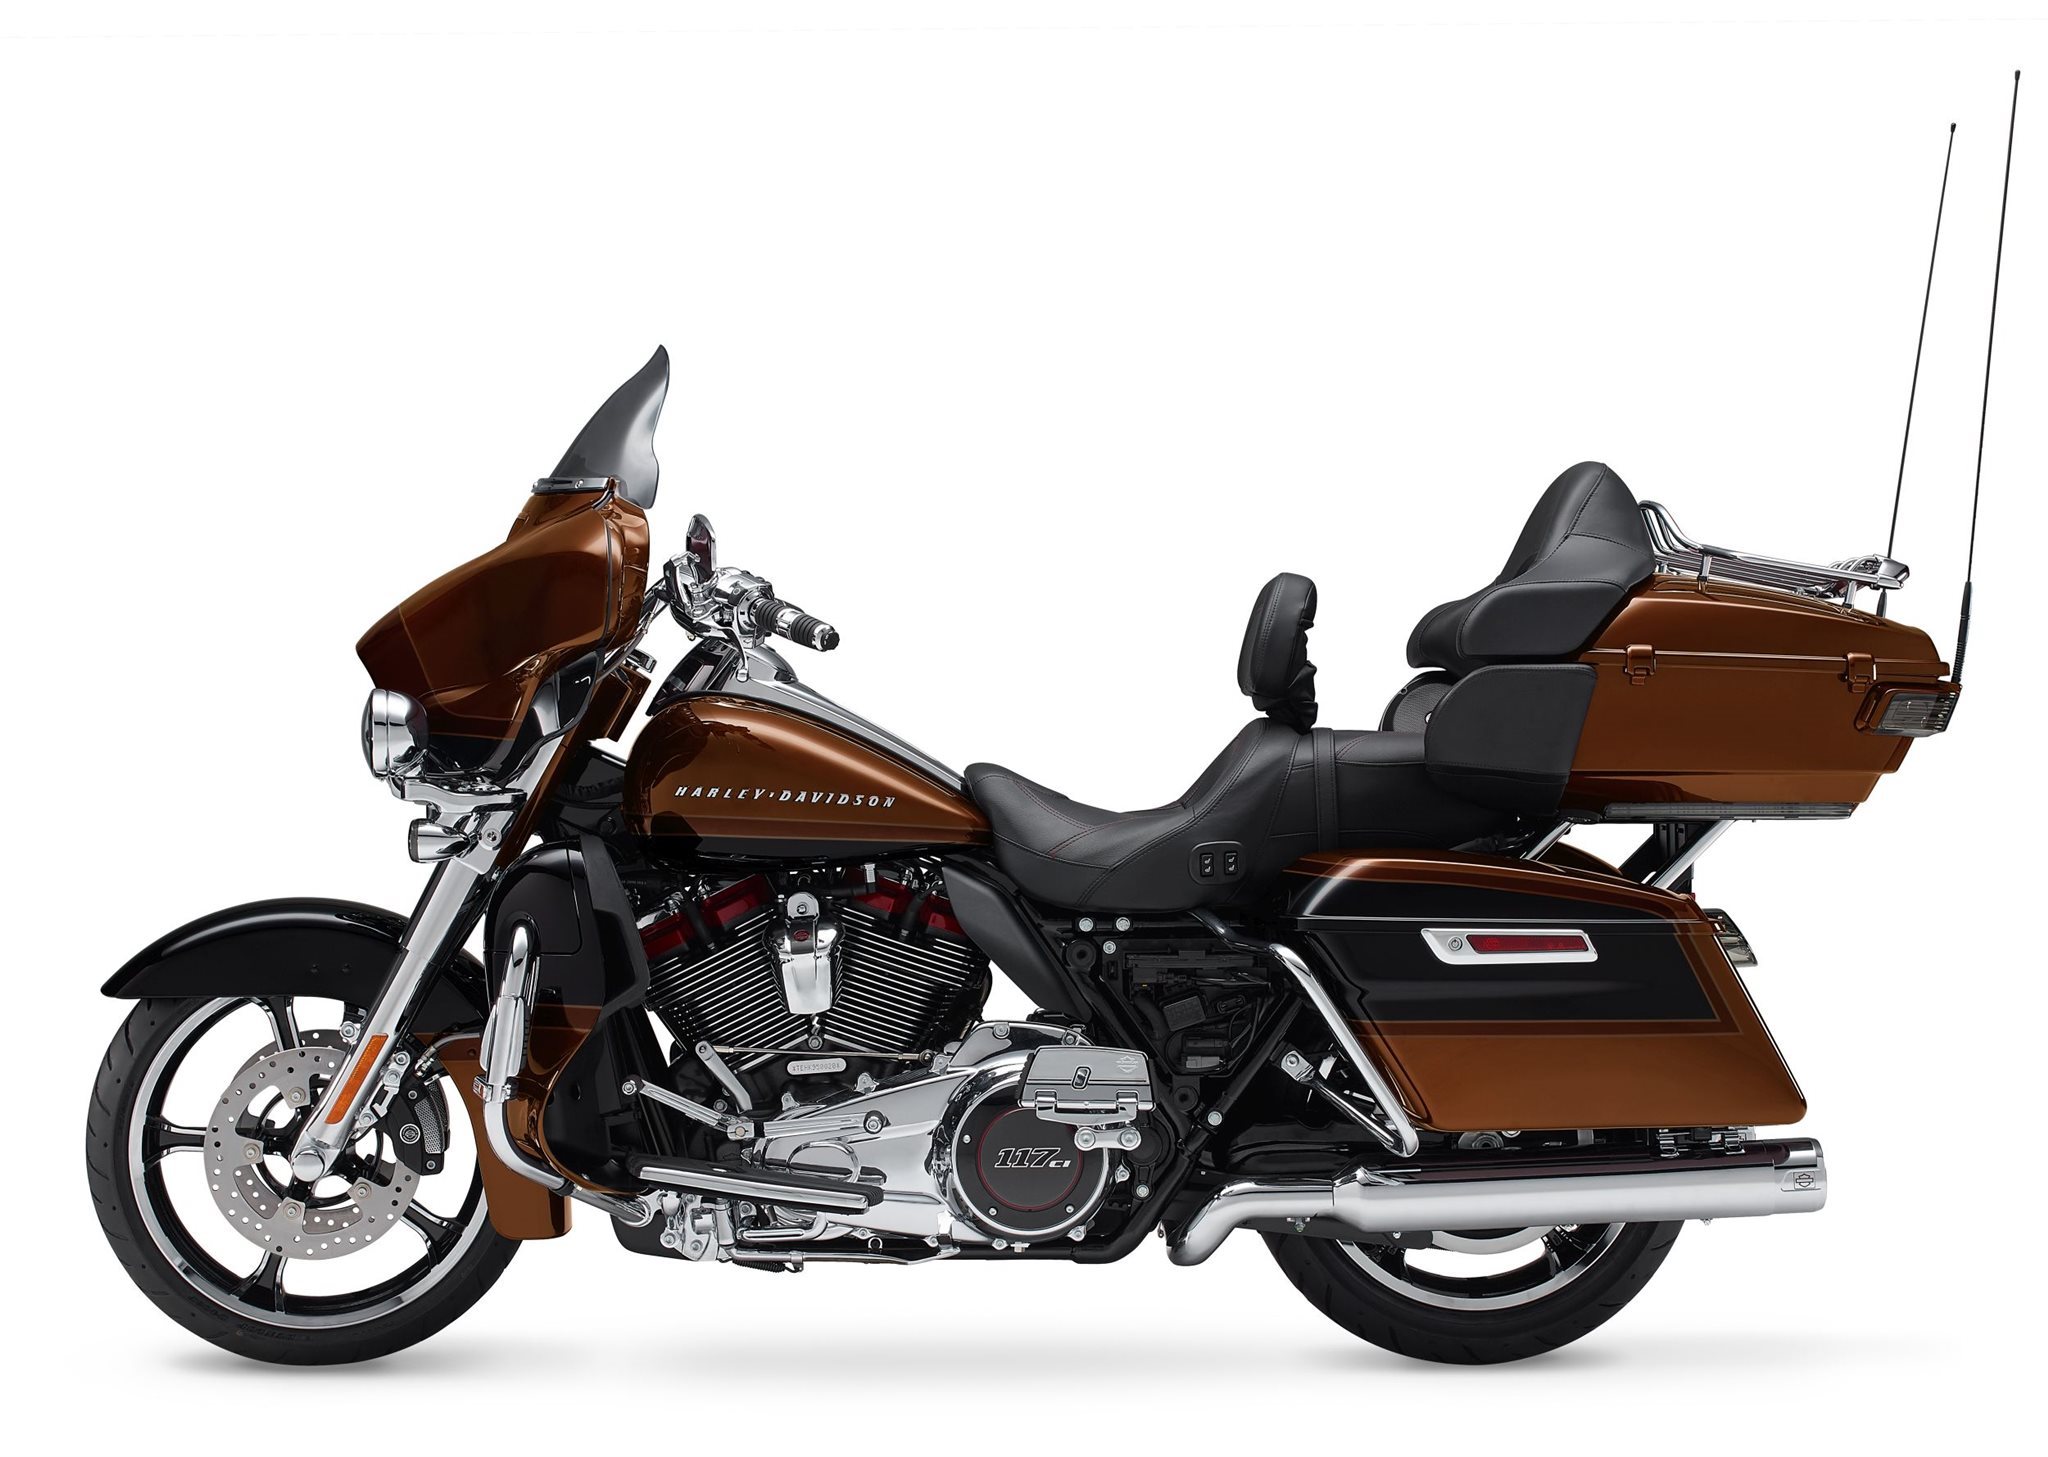 Motorrad Vergleich Harley Davidson Cvo Limited Flhtkse 2020 Vs Indian Challenger Limited 2020